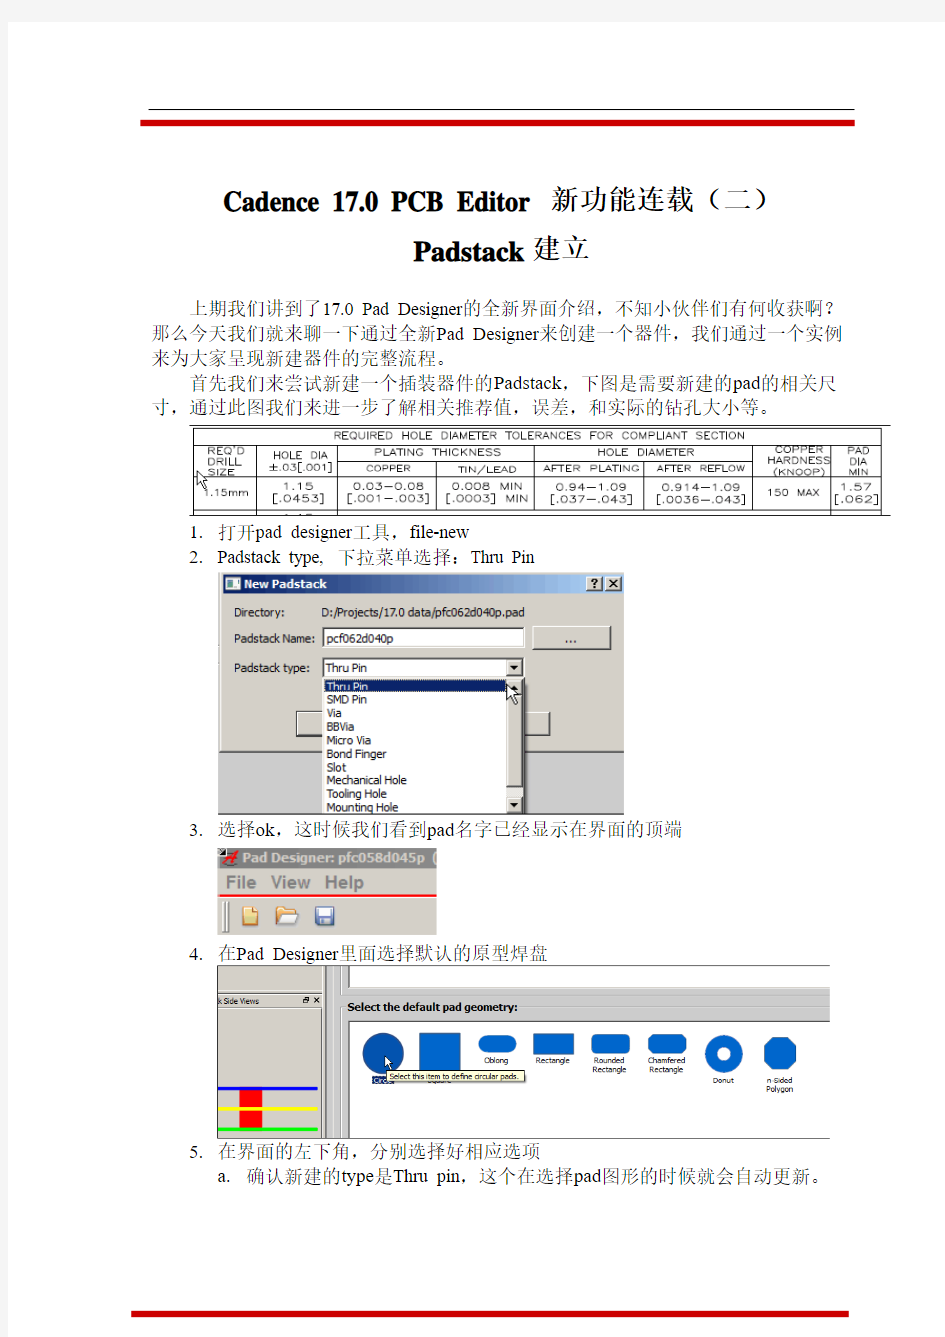 Cadence 17.0 PCB Edit 新功能连载(二)